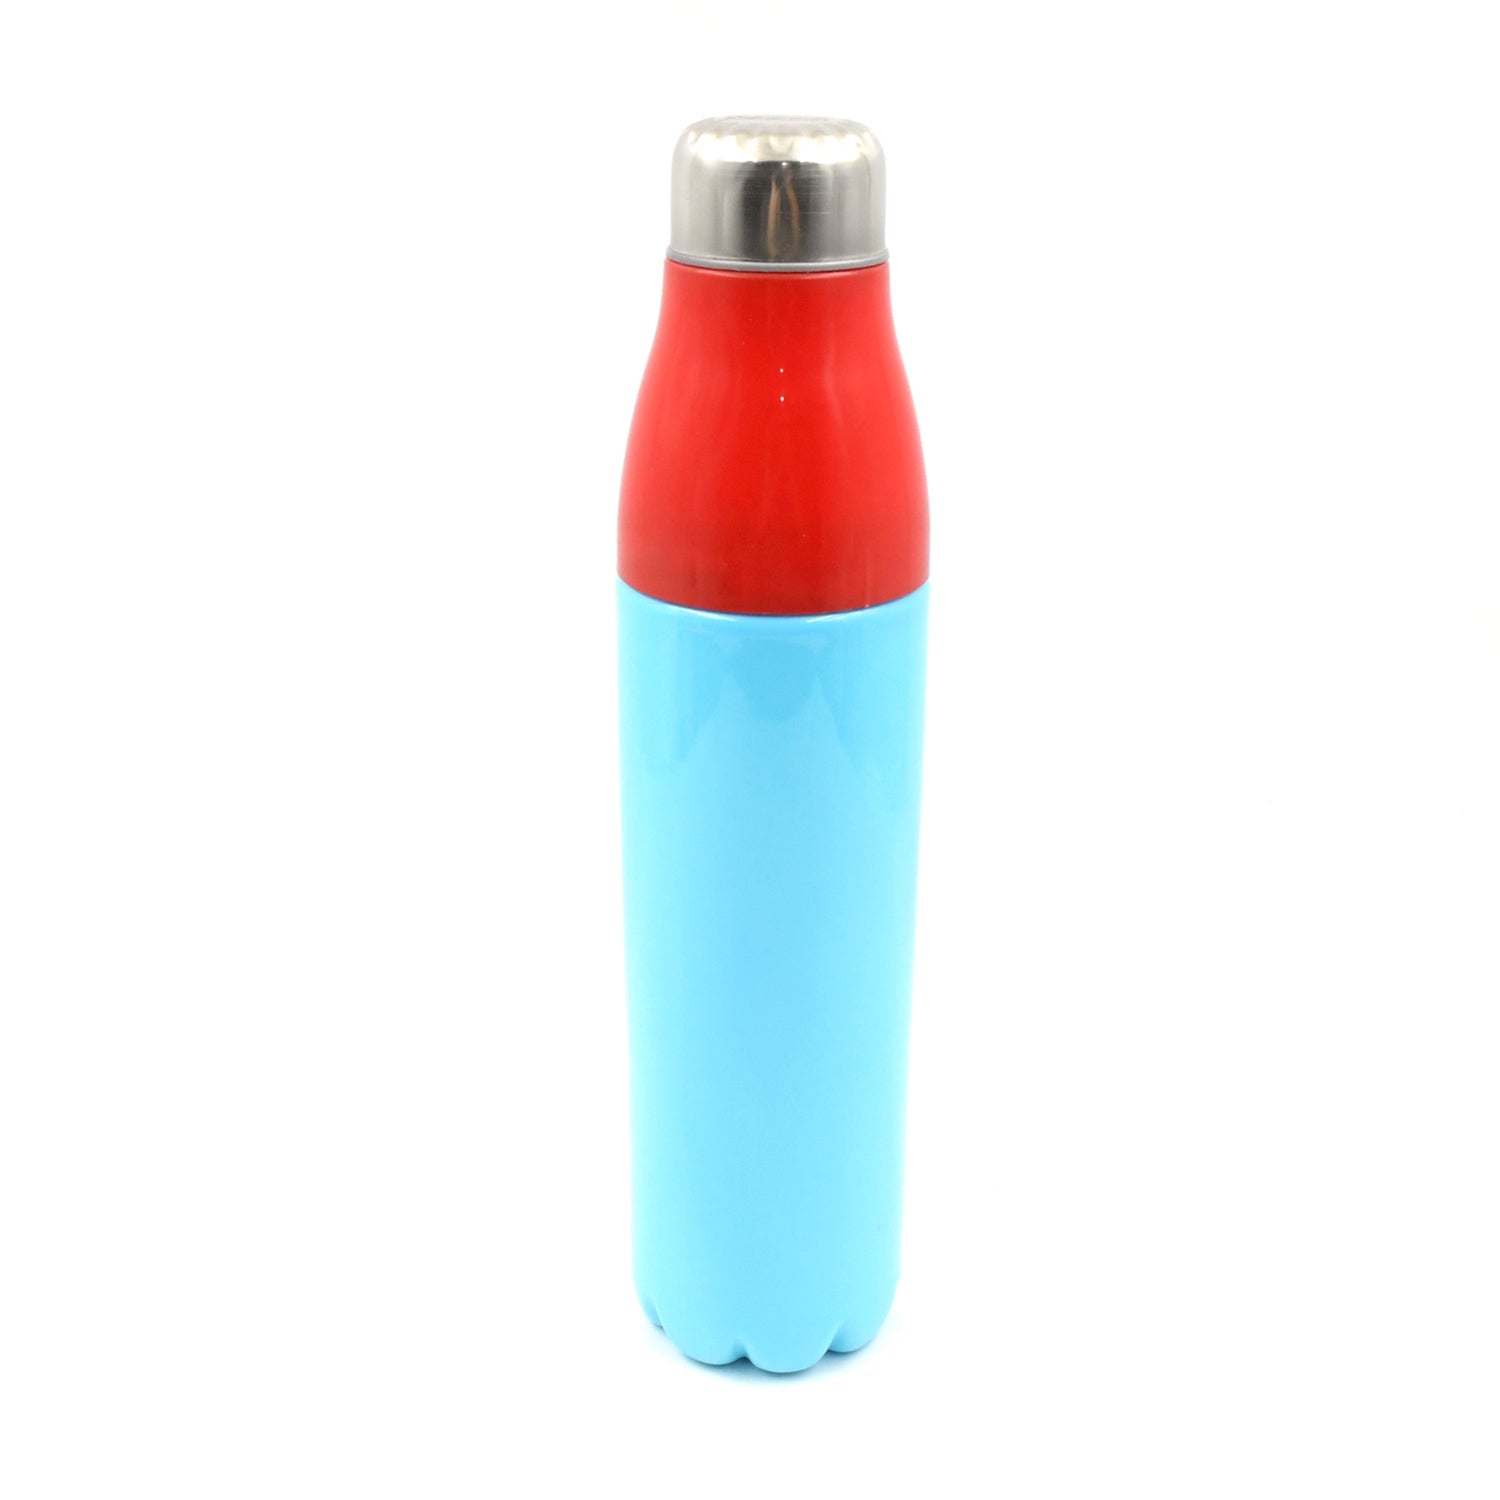 0373 Plastic Water Bottle High Quality Cool Water Bottle Plastic Water Bottle For Fridge, Office, Sports, School, Gym, Yoga (800Ml)